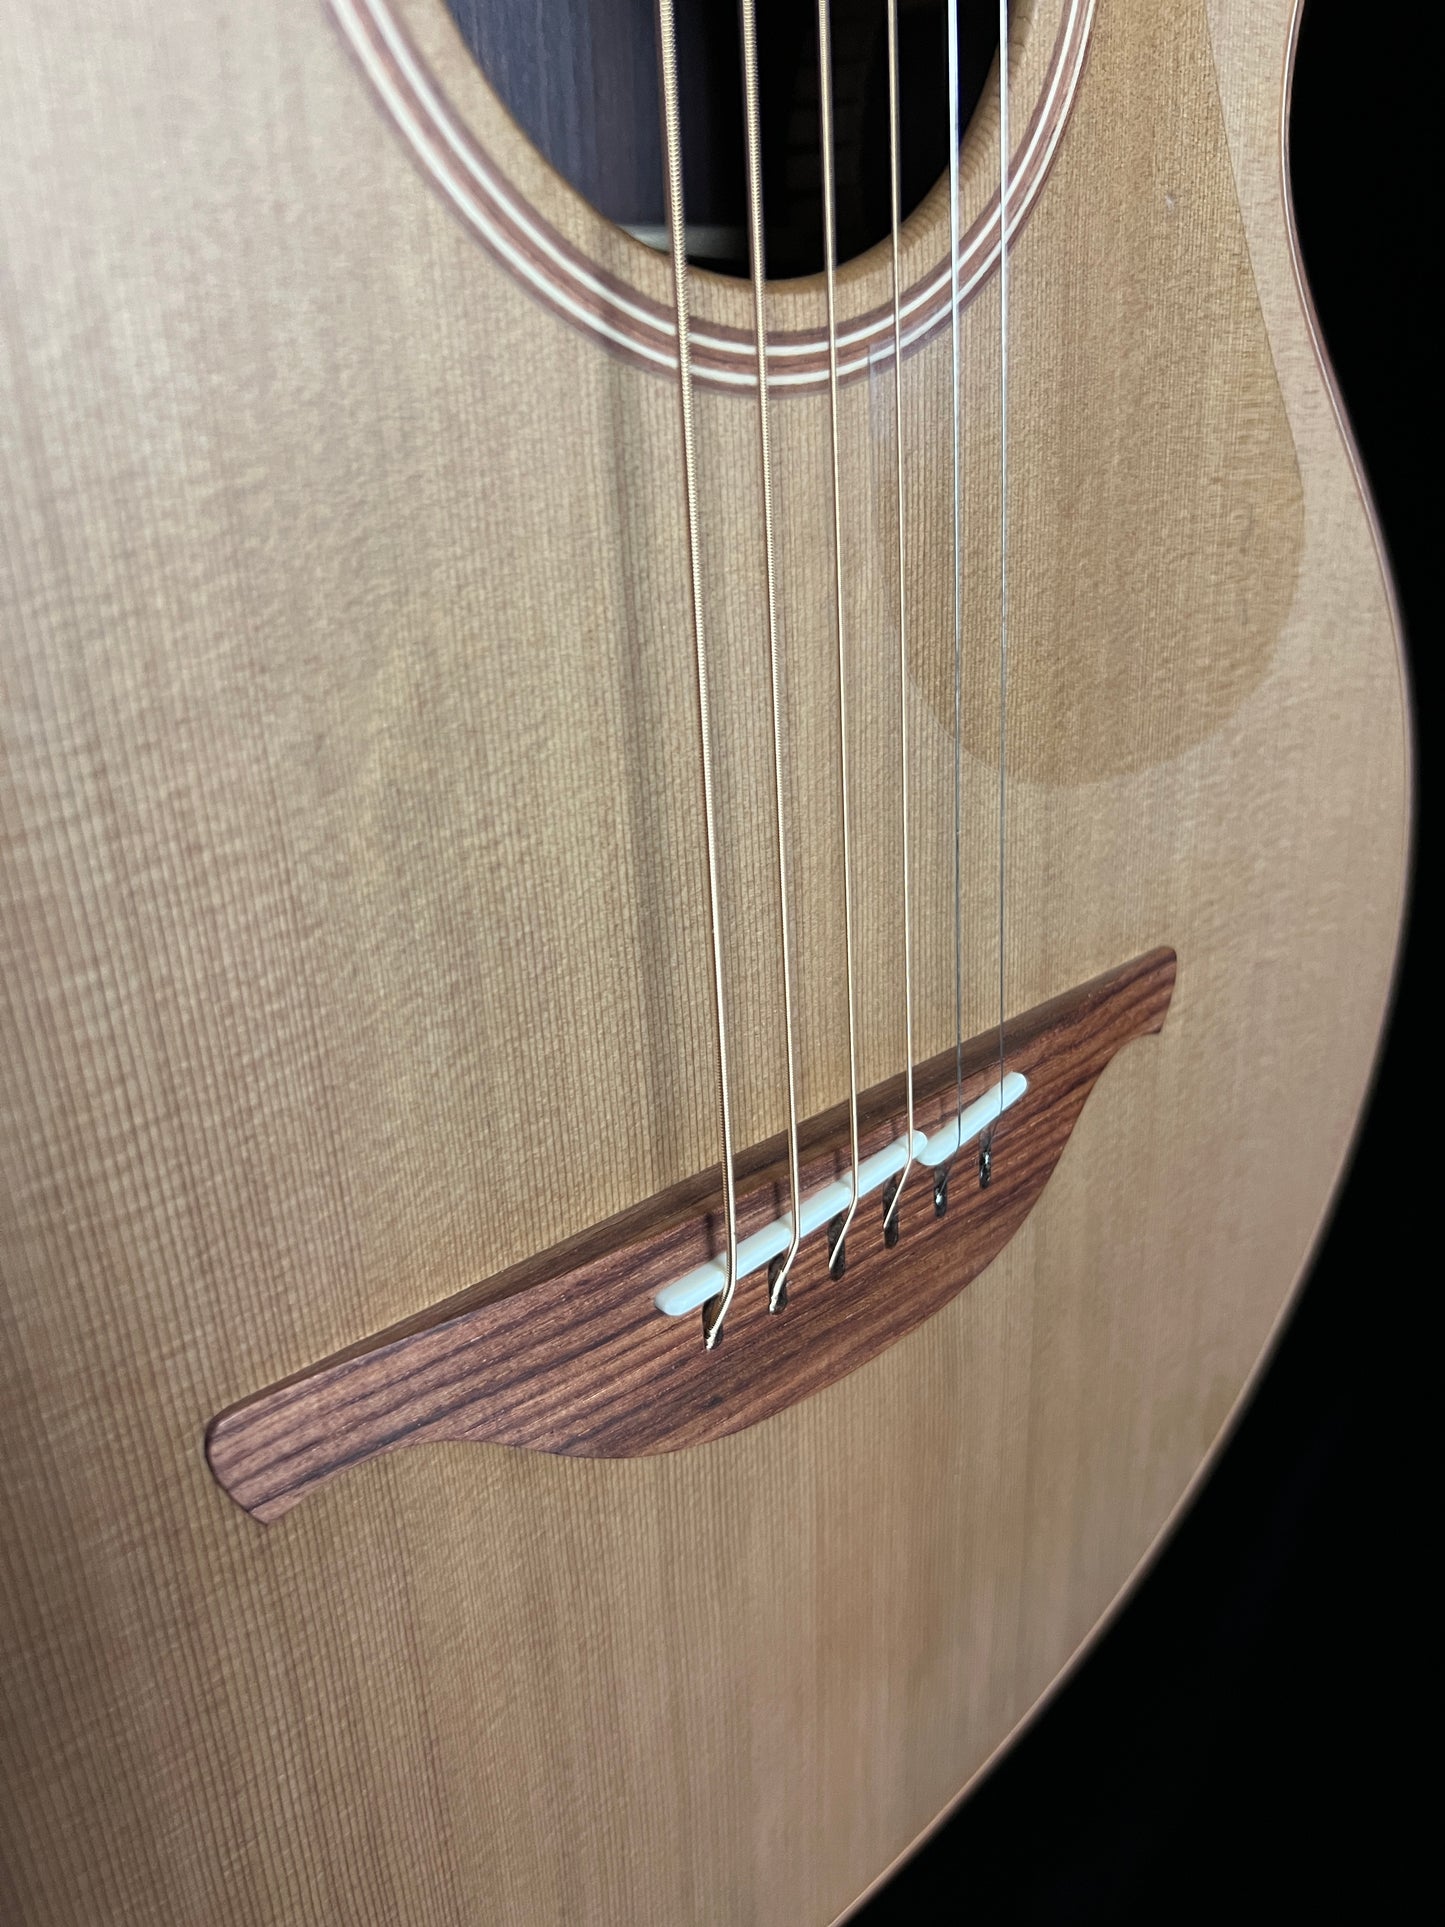 Lowden S-25C  Original Series 25  Red Cedar / East Indian Rosewood 12 Fret Cutaway Acoustic Guitar - New